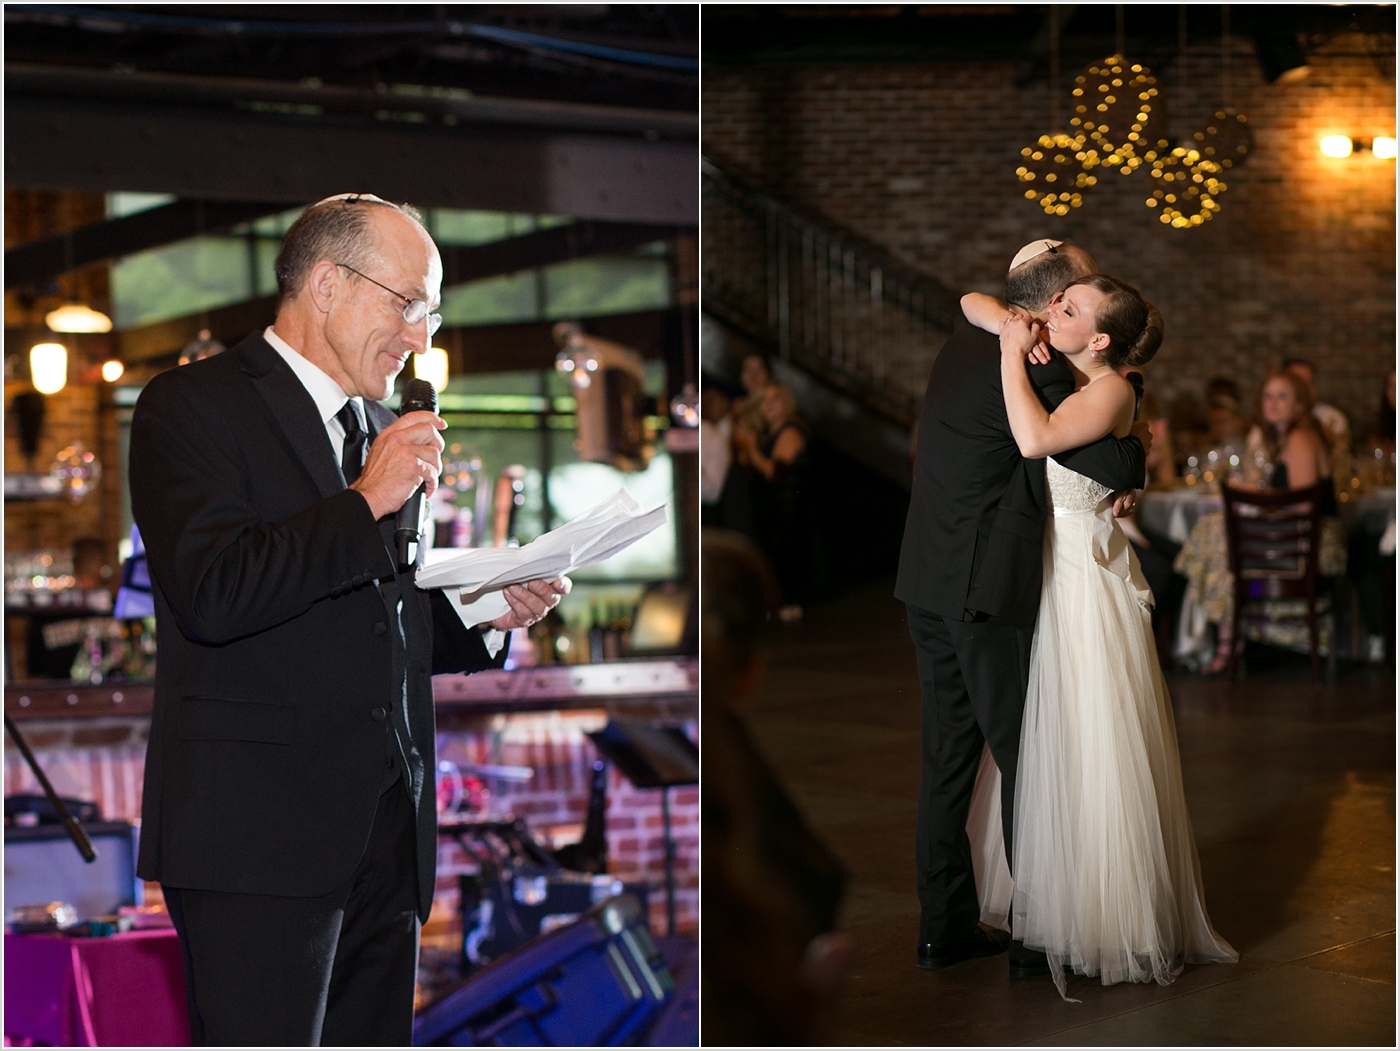 kellylemonphotography_a downtown denver Jewish wedding at Mile High station Photos-91_web